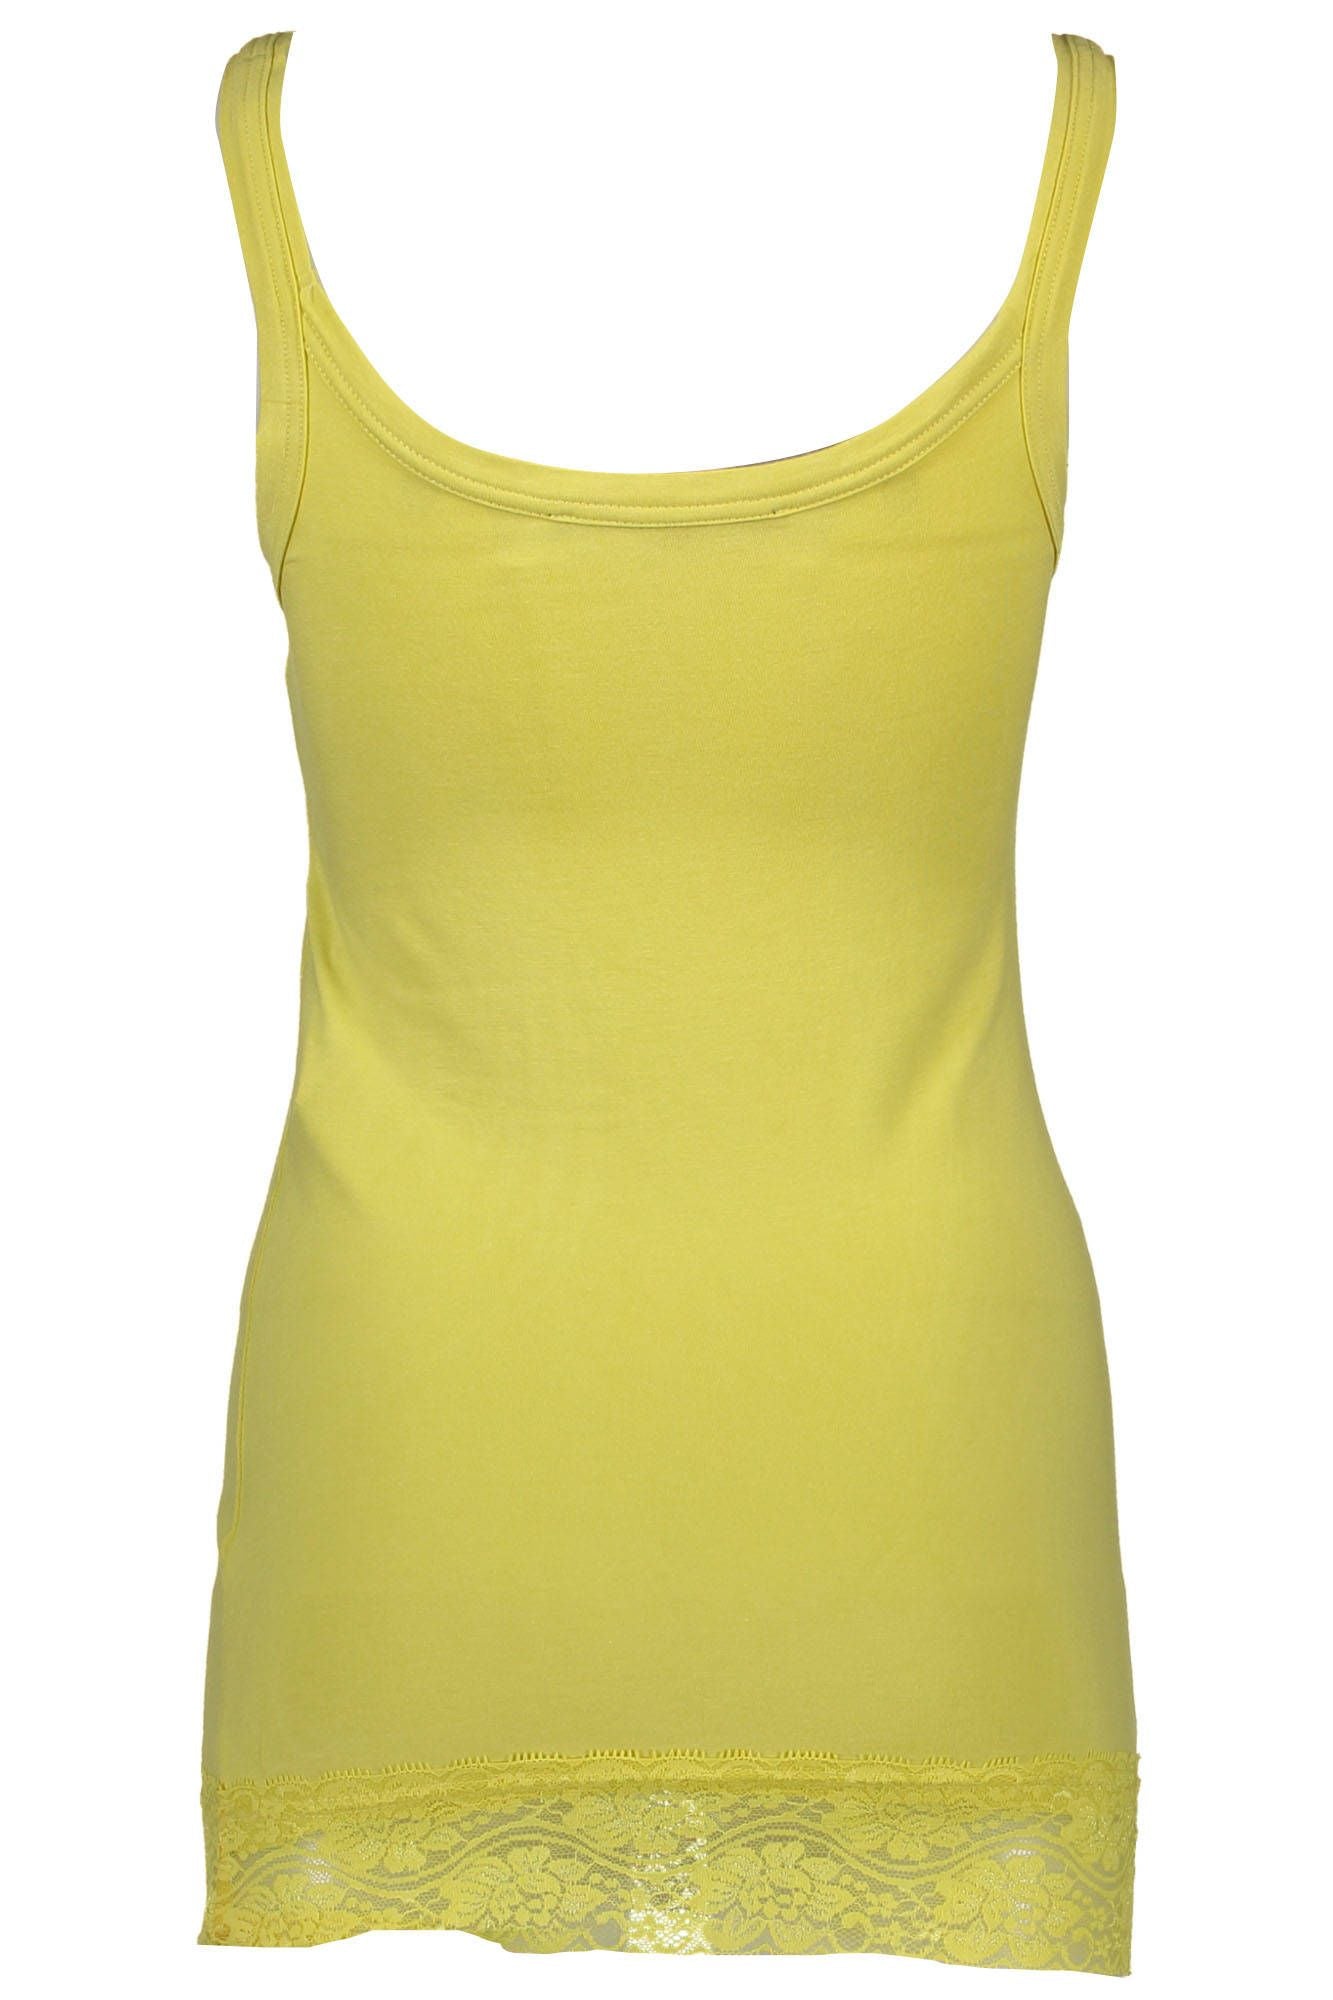 Silvian Heach Chic Yellow Lace-Insert Tank Top